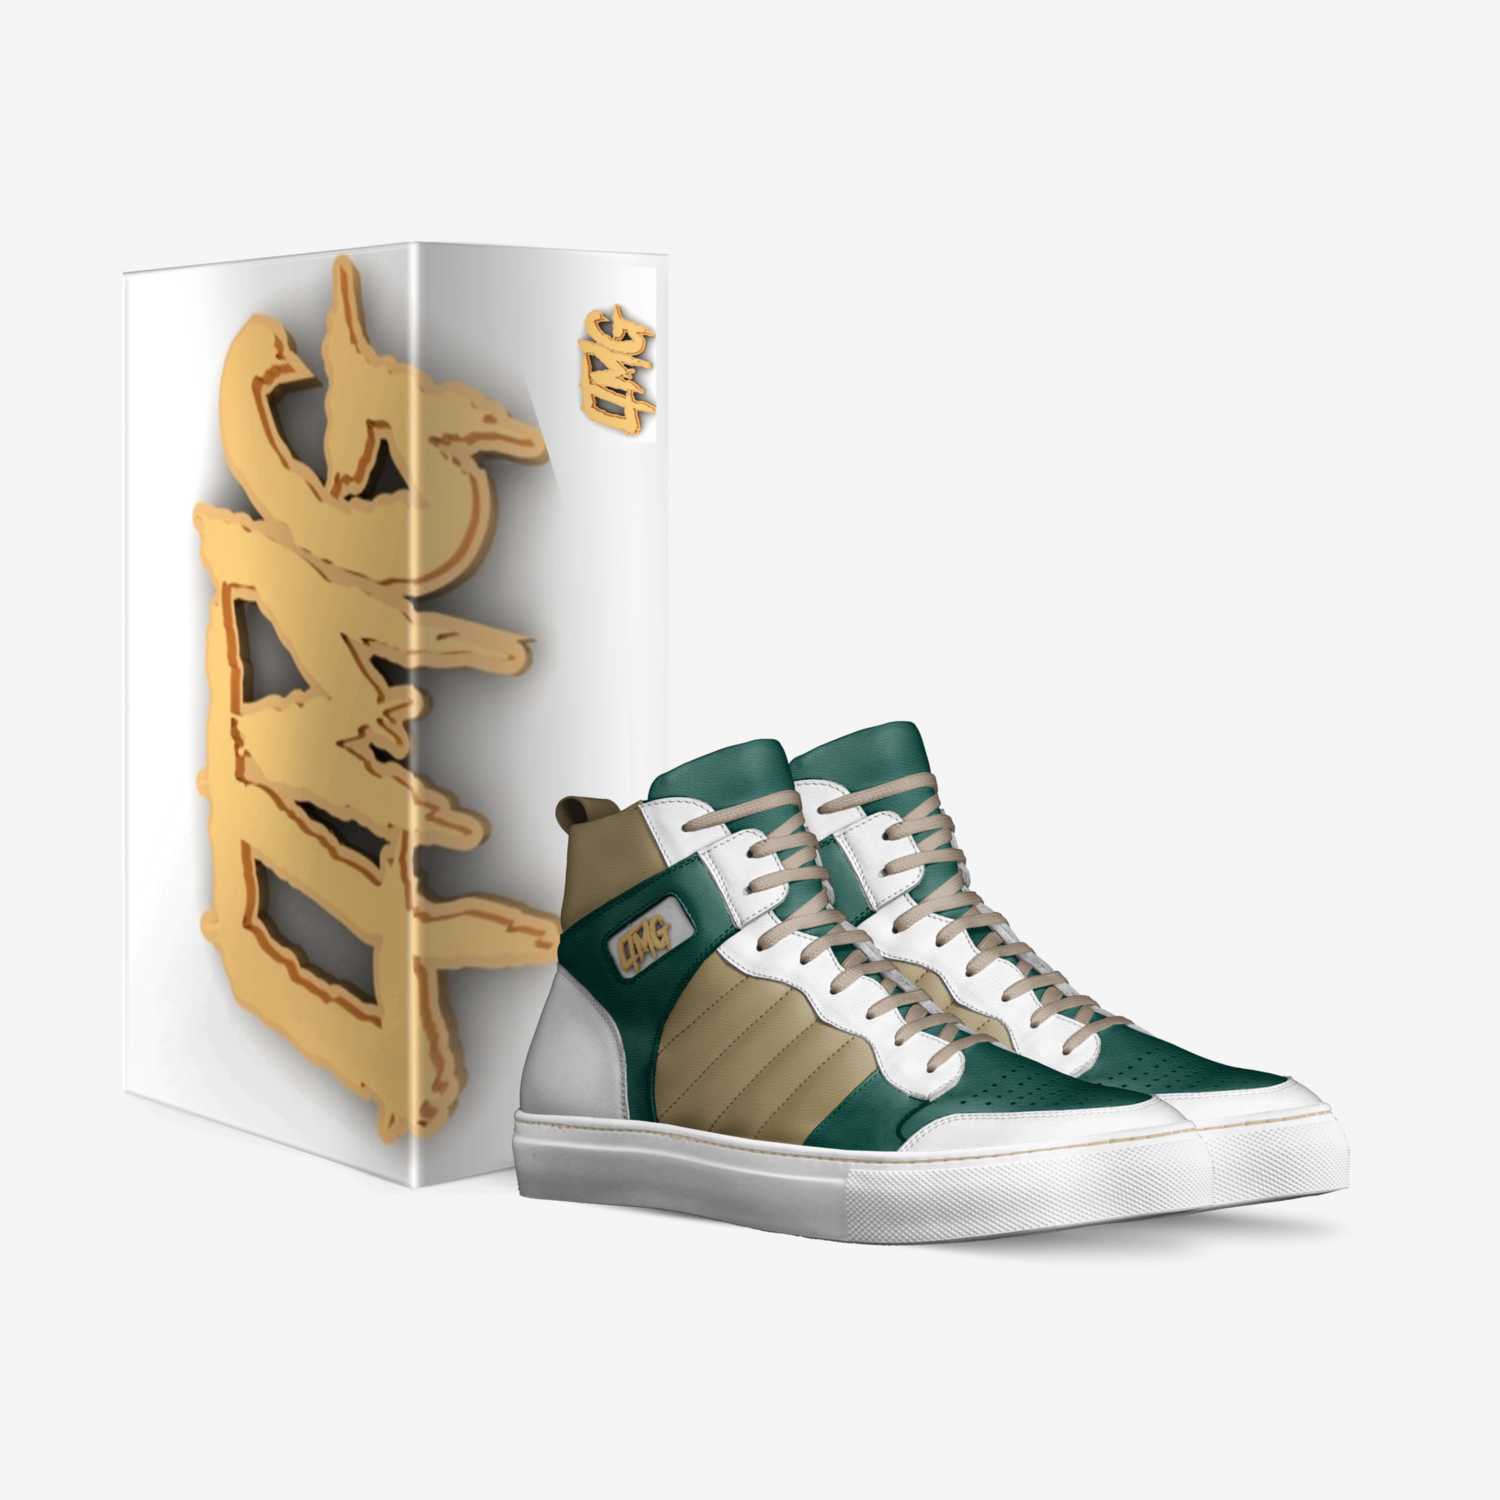 Swain custom made in Italy shoes by Wayne Swain | Box view